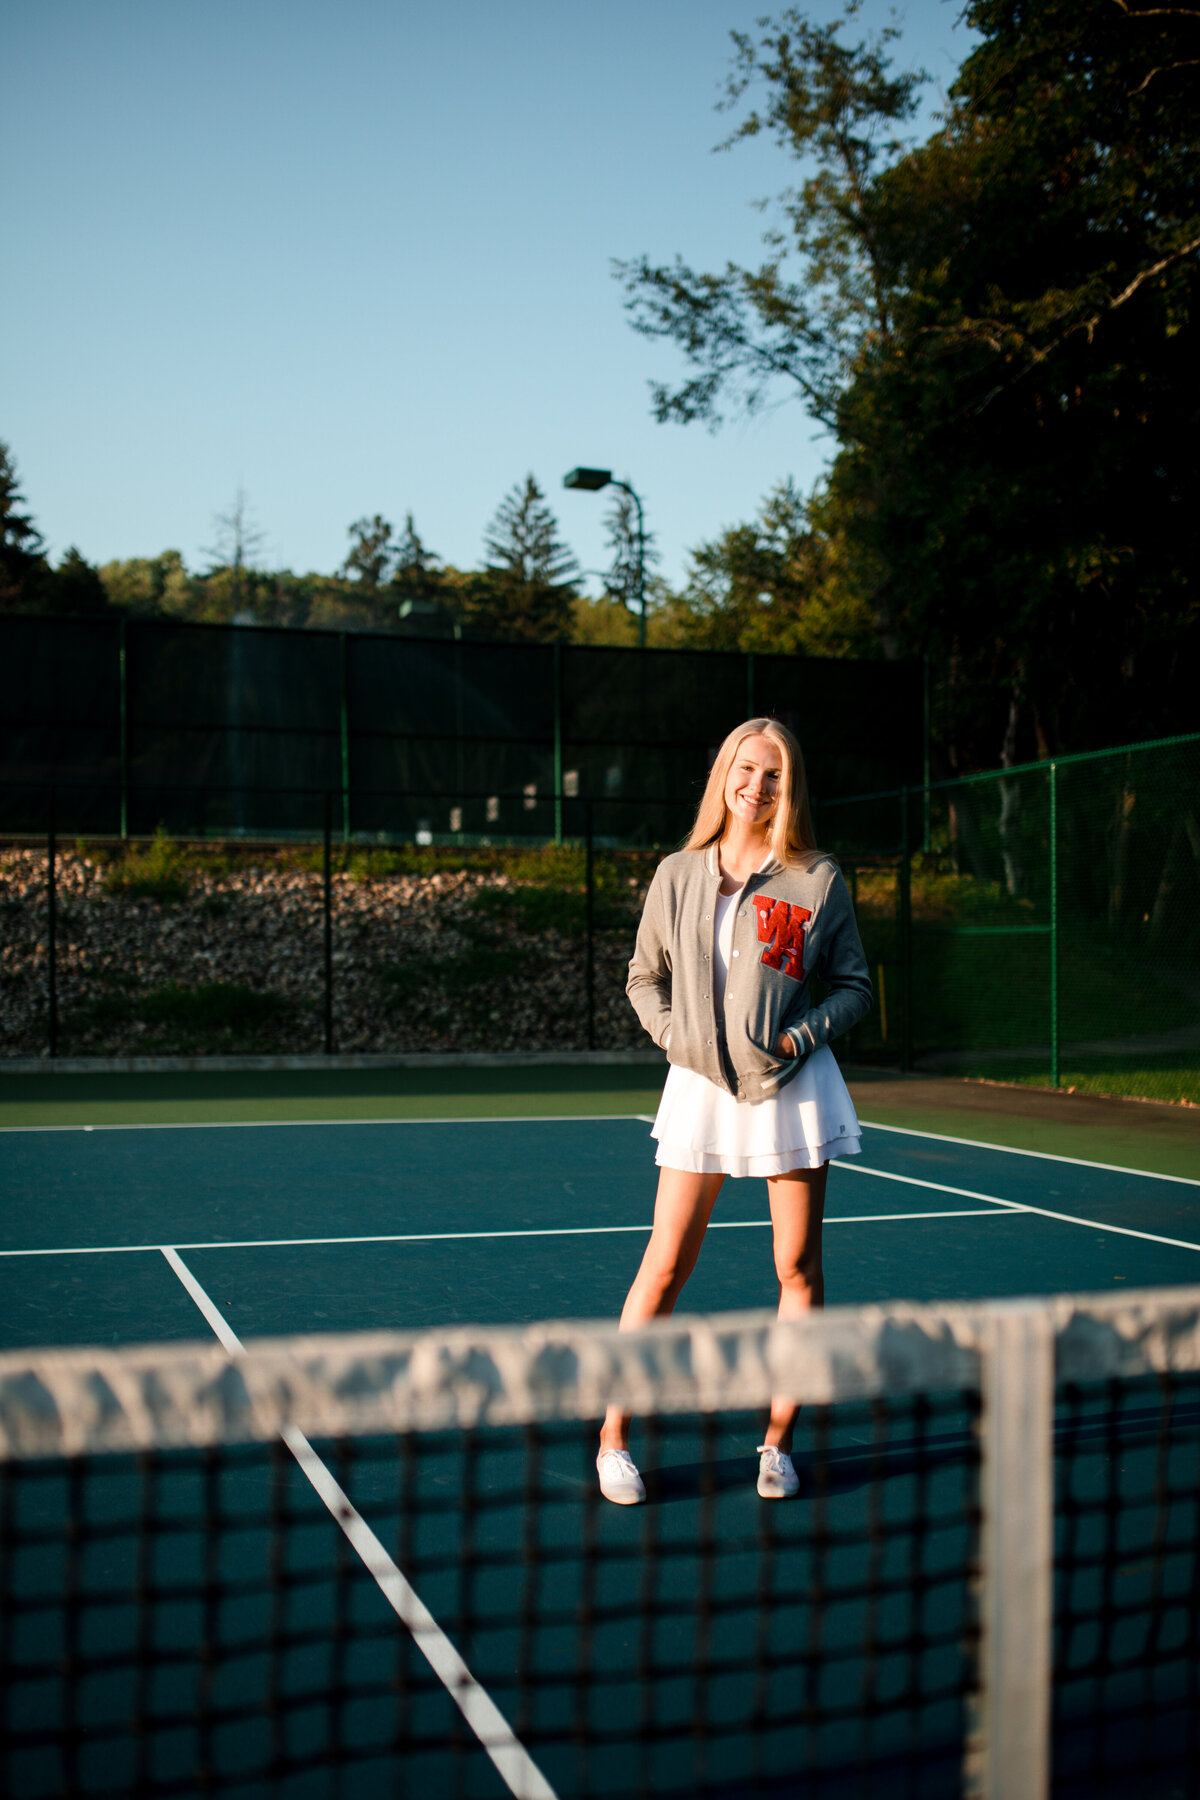 vibrant-senior-portrait-tennis-court